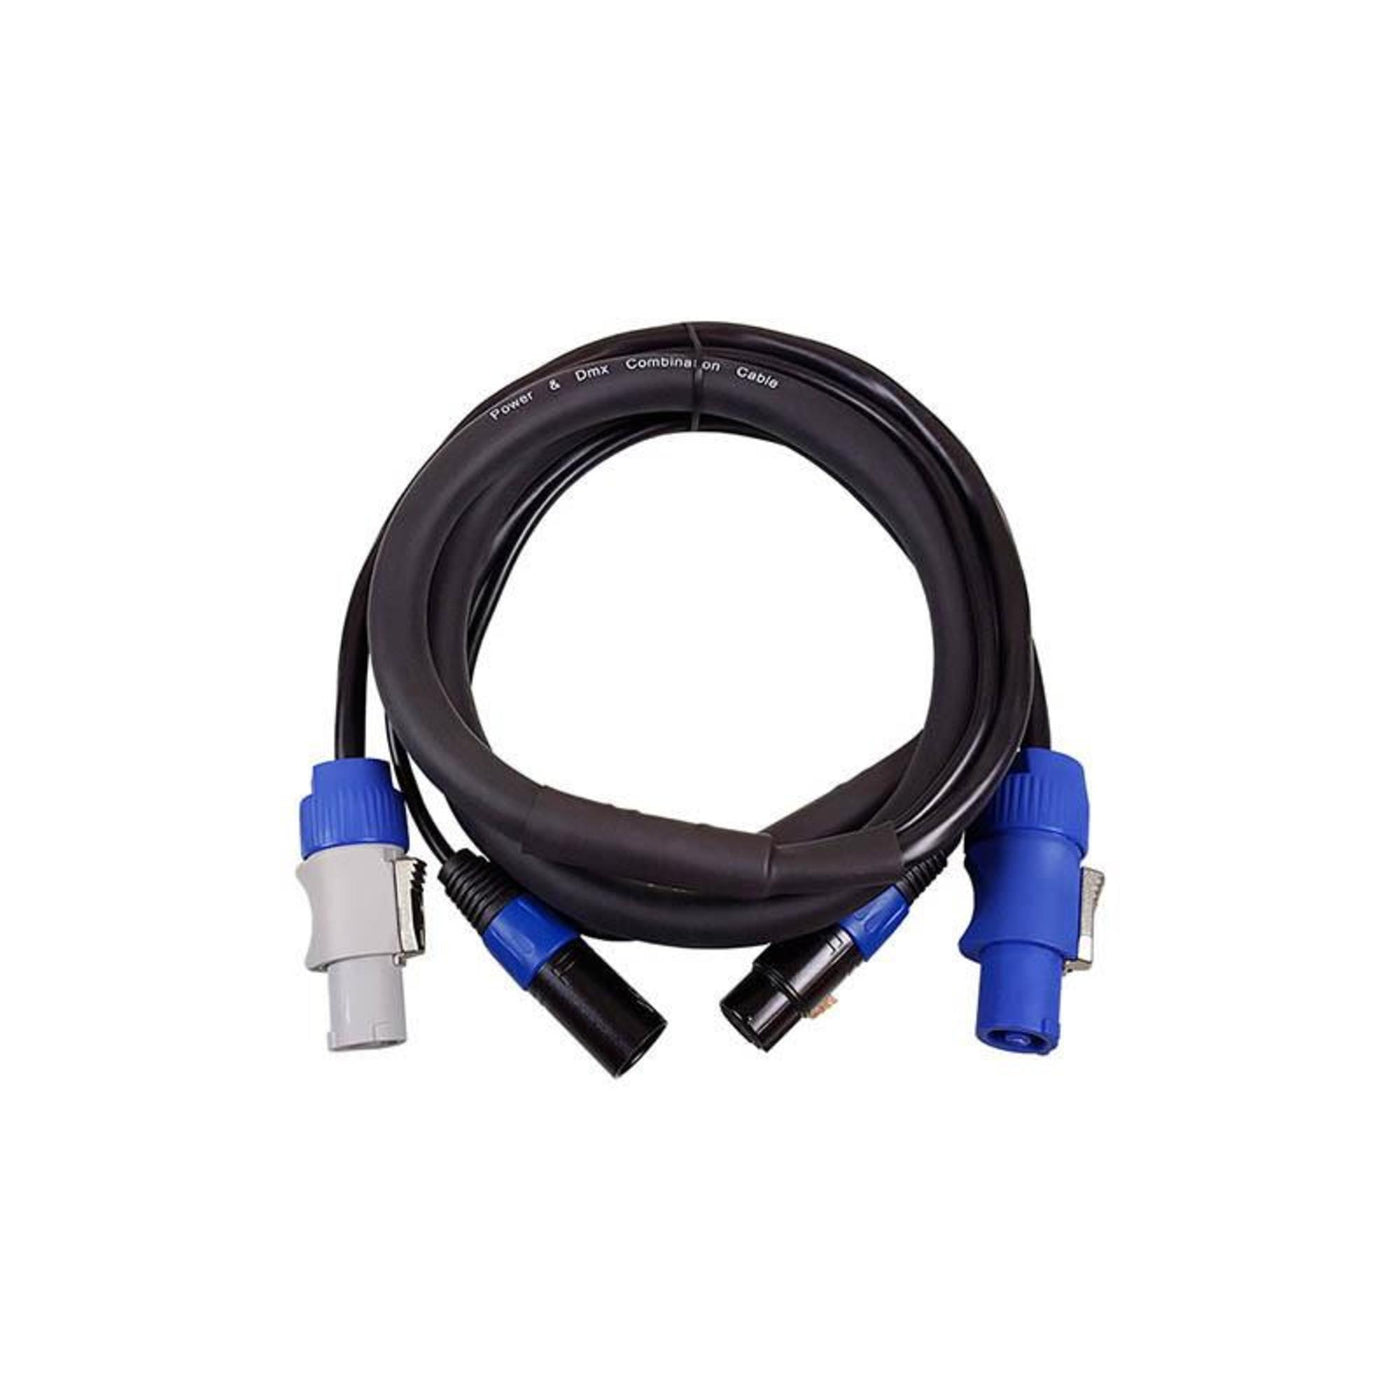 Blizzard Cool Cable 123877 DMXPC-10 DMX 3-pin PC Combo Cable